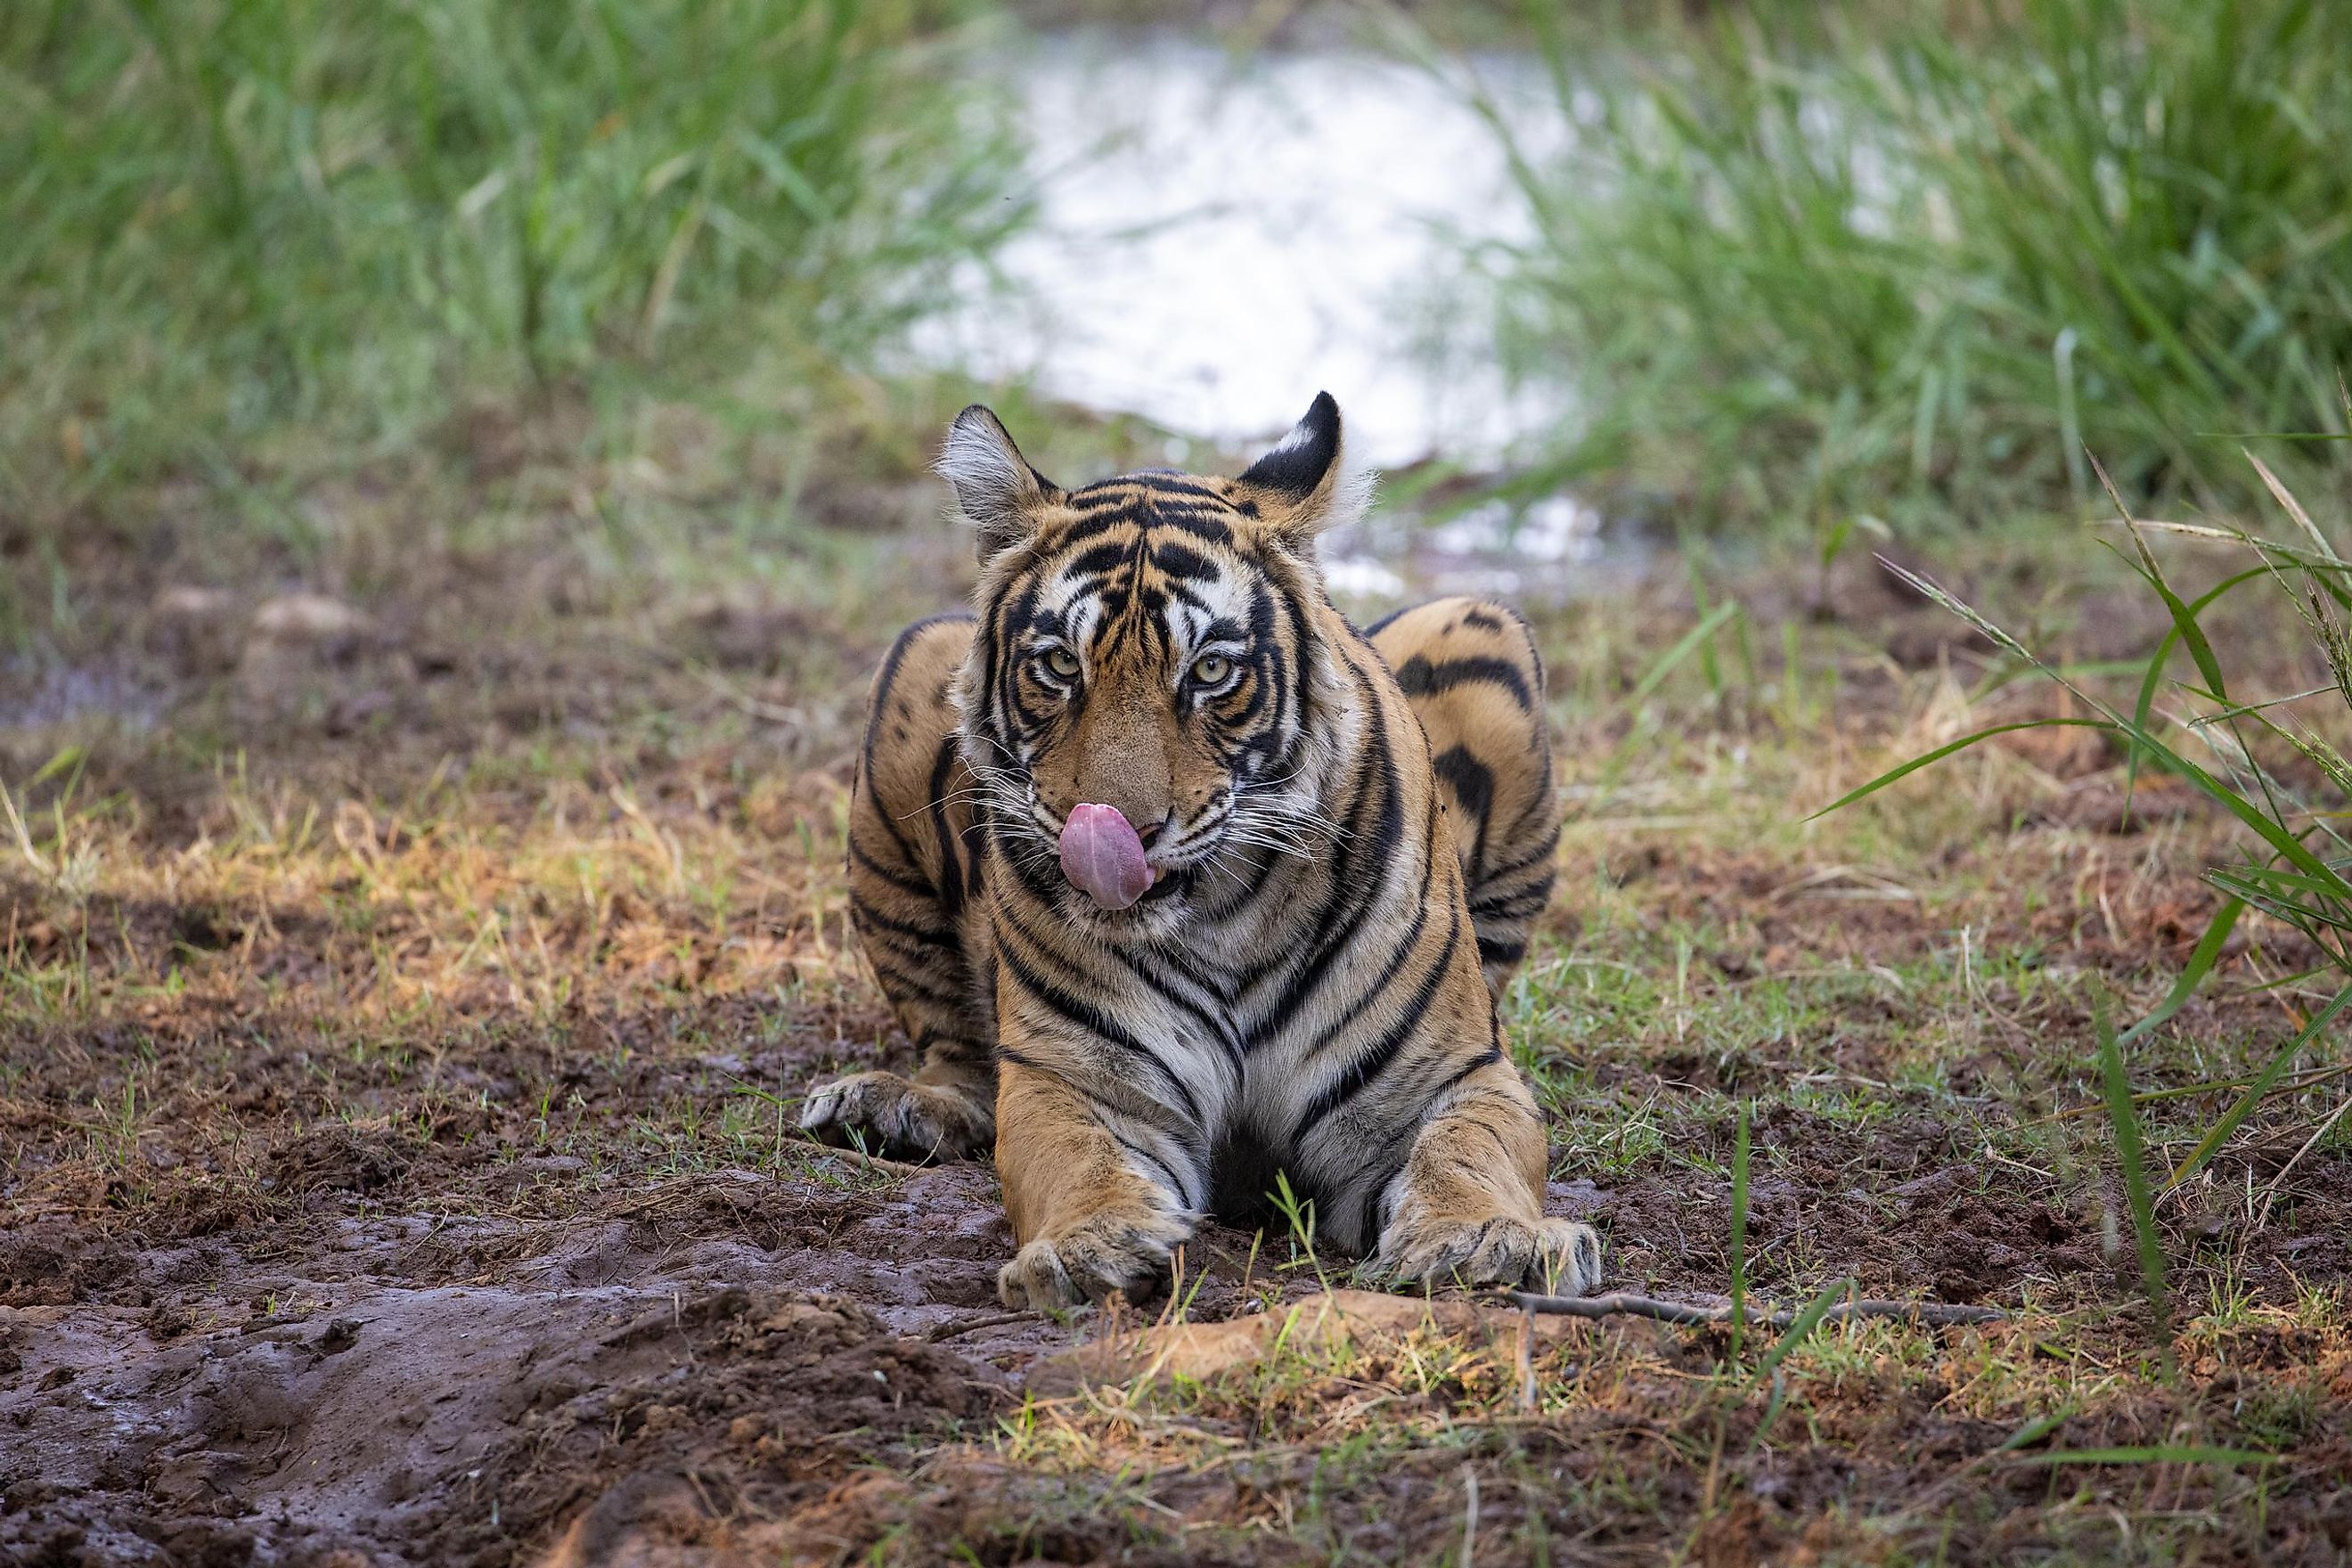 A Bengal tiger in the Ranthambore National Park. Image credit: Sanchi Aggarwal